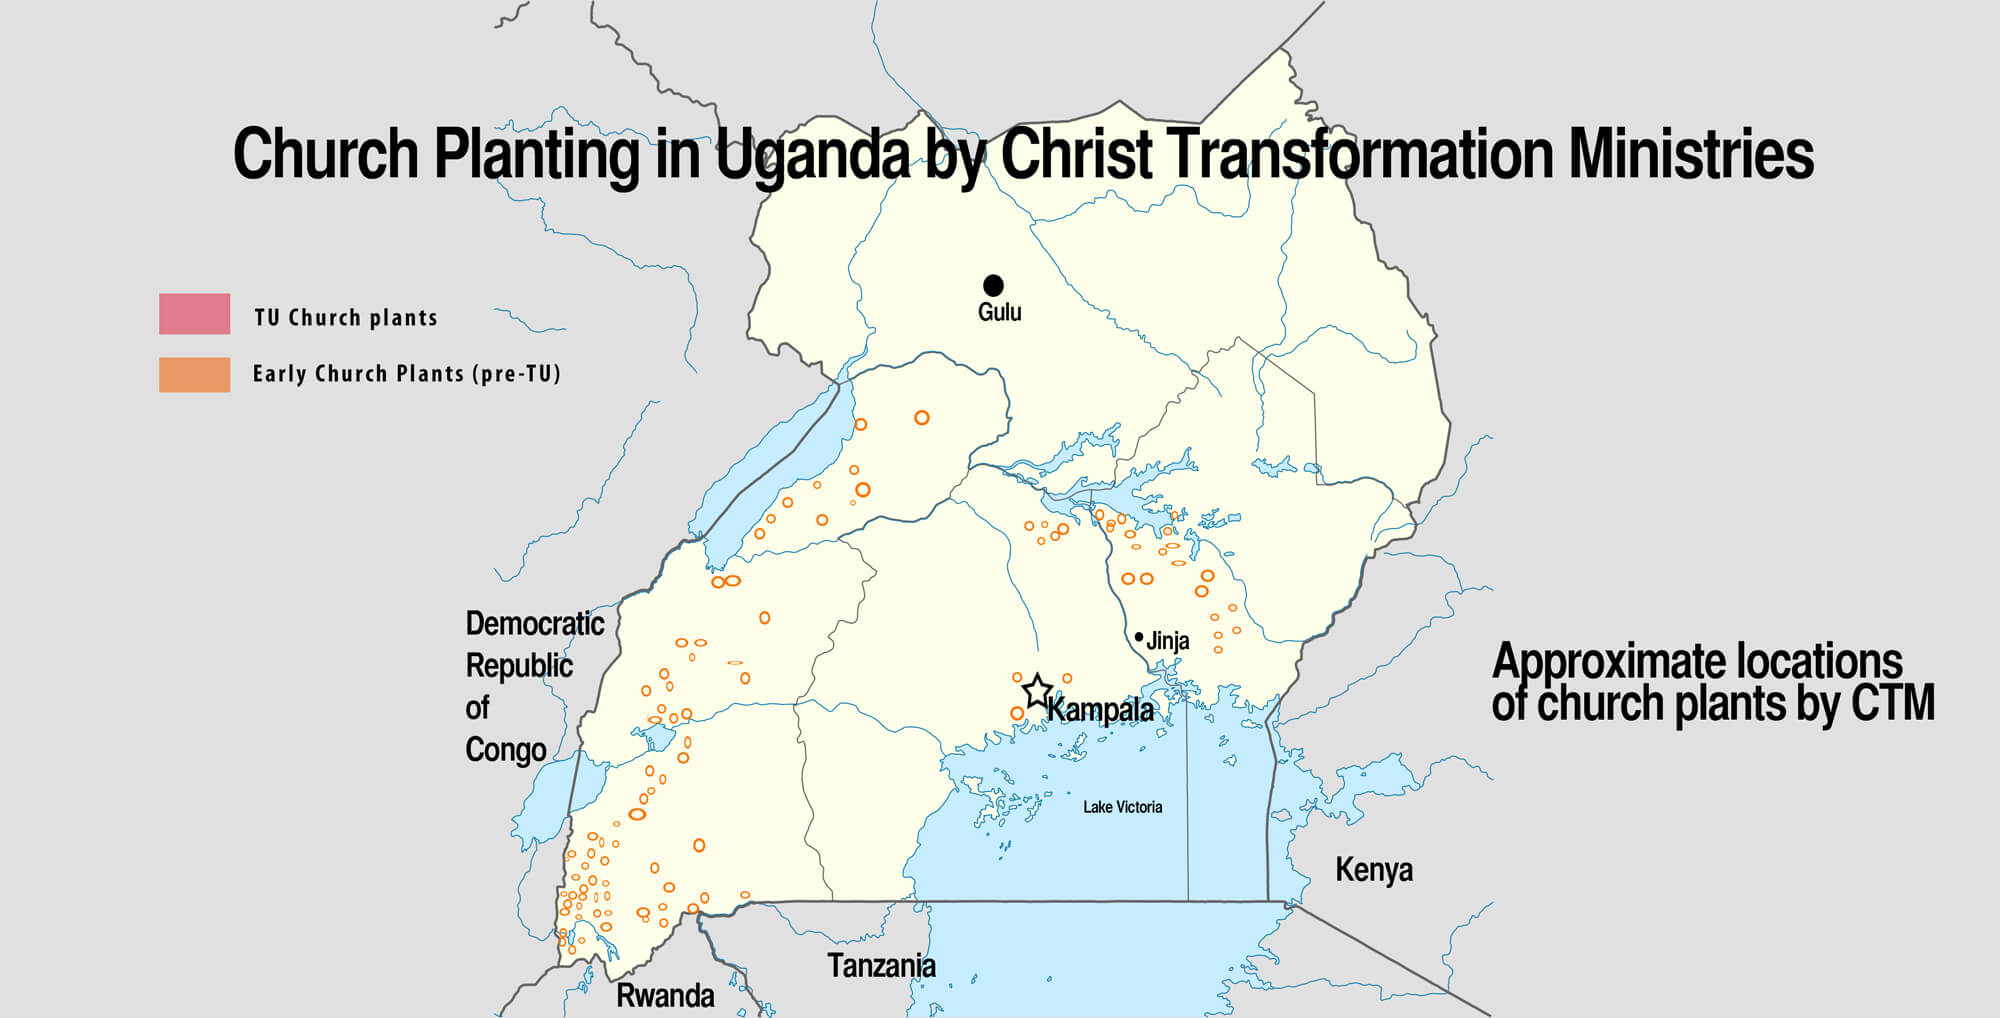 Church Planting in Uganda by Christ Transformation Ministries